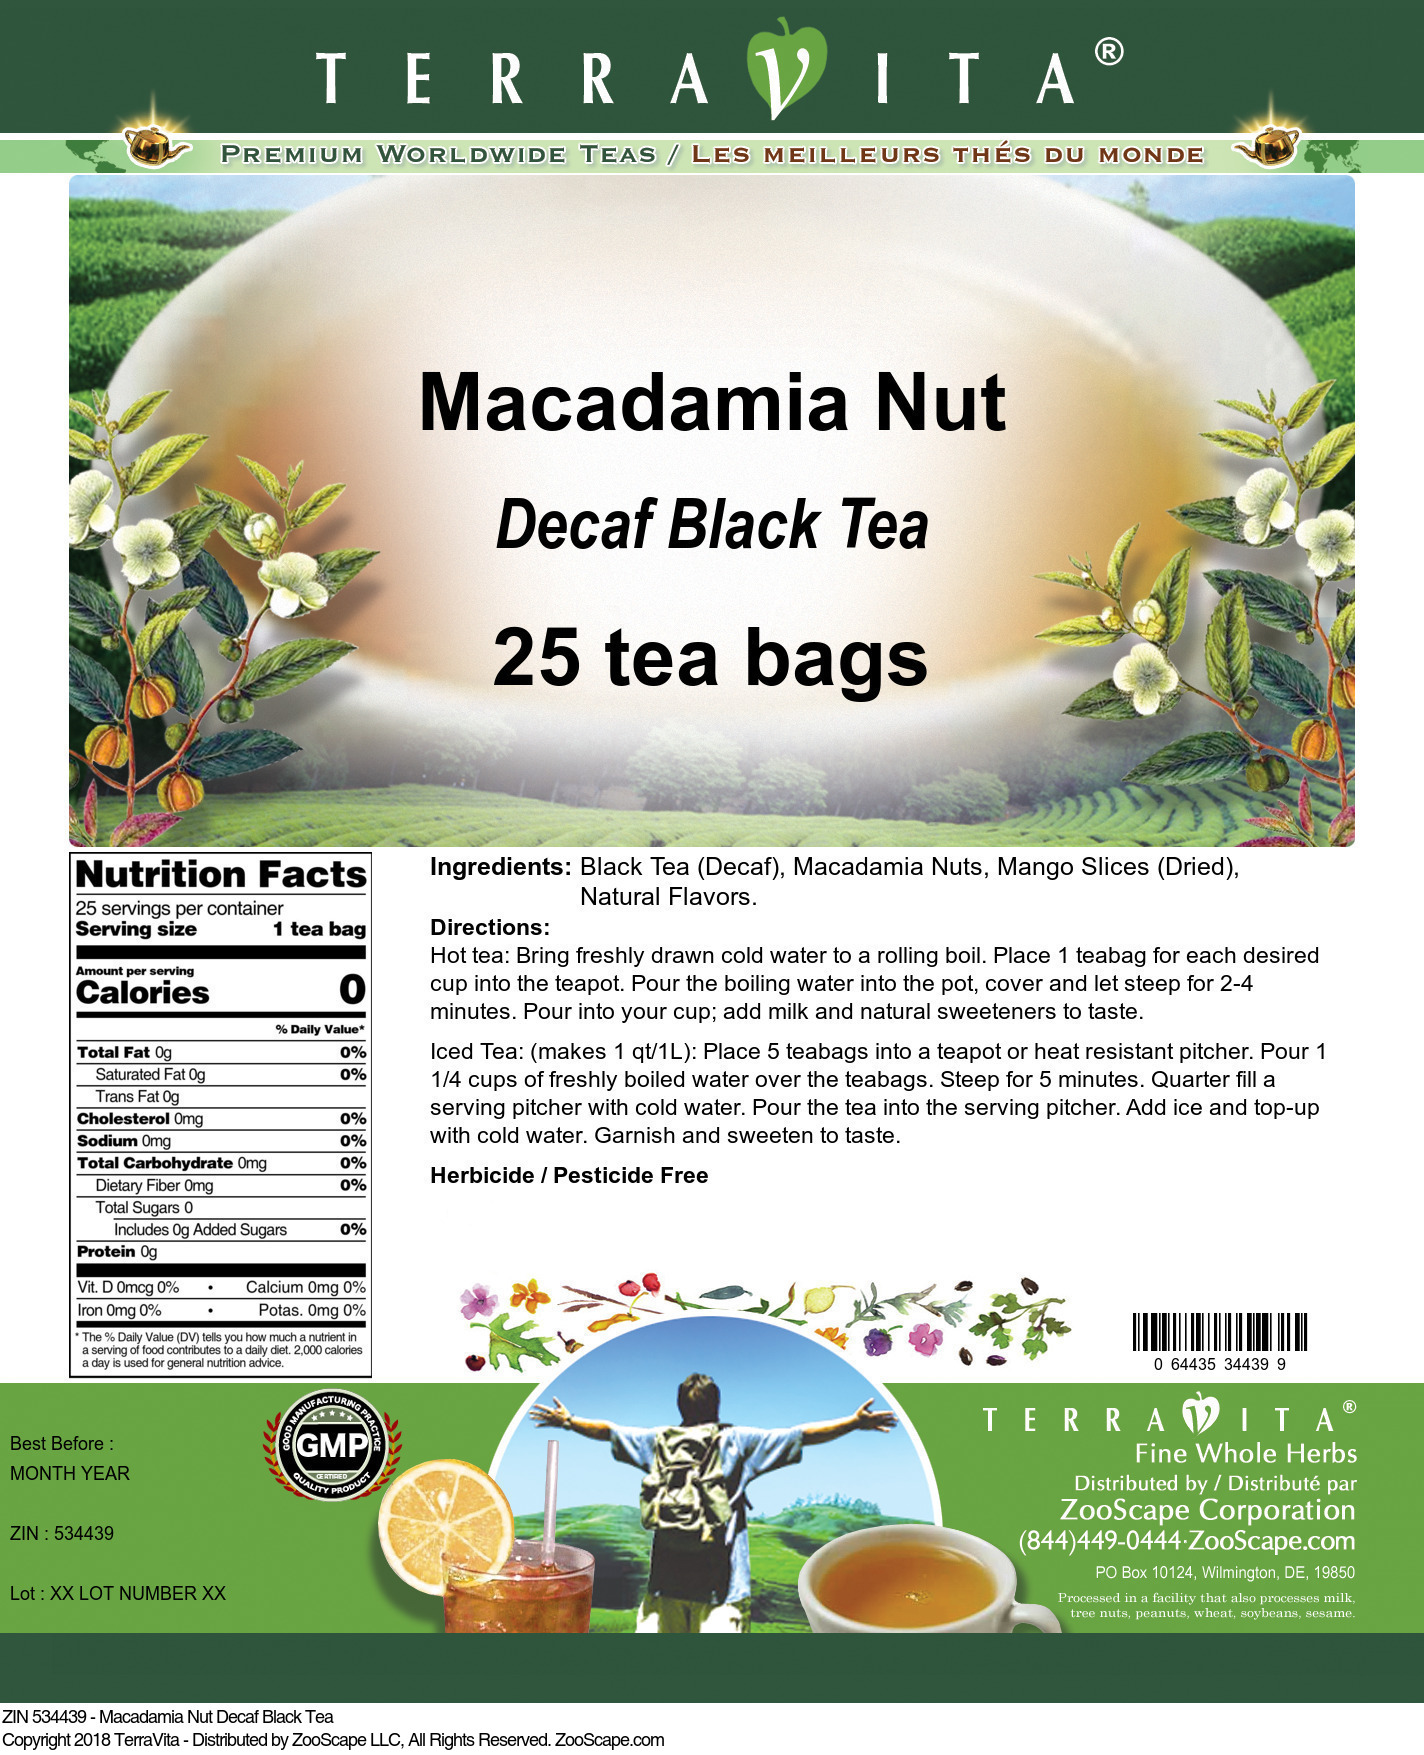 Macadamia Nut Decaf Black Tea - Label